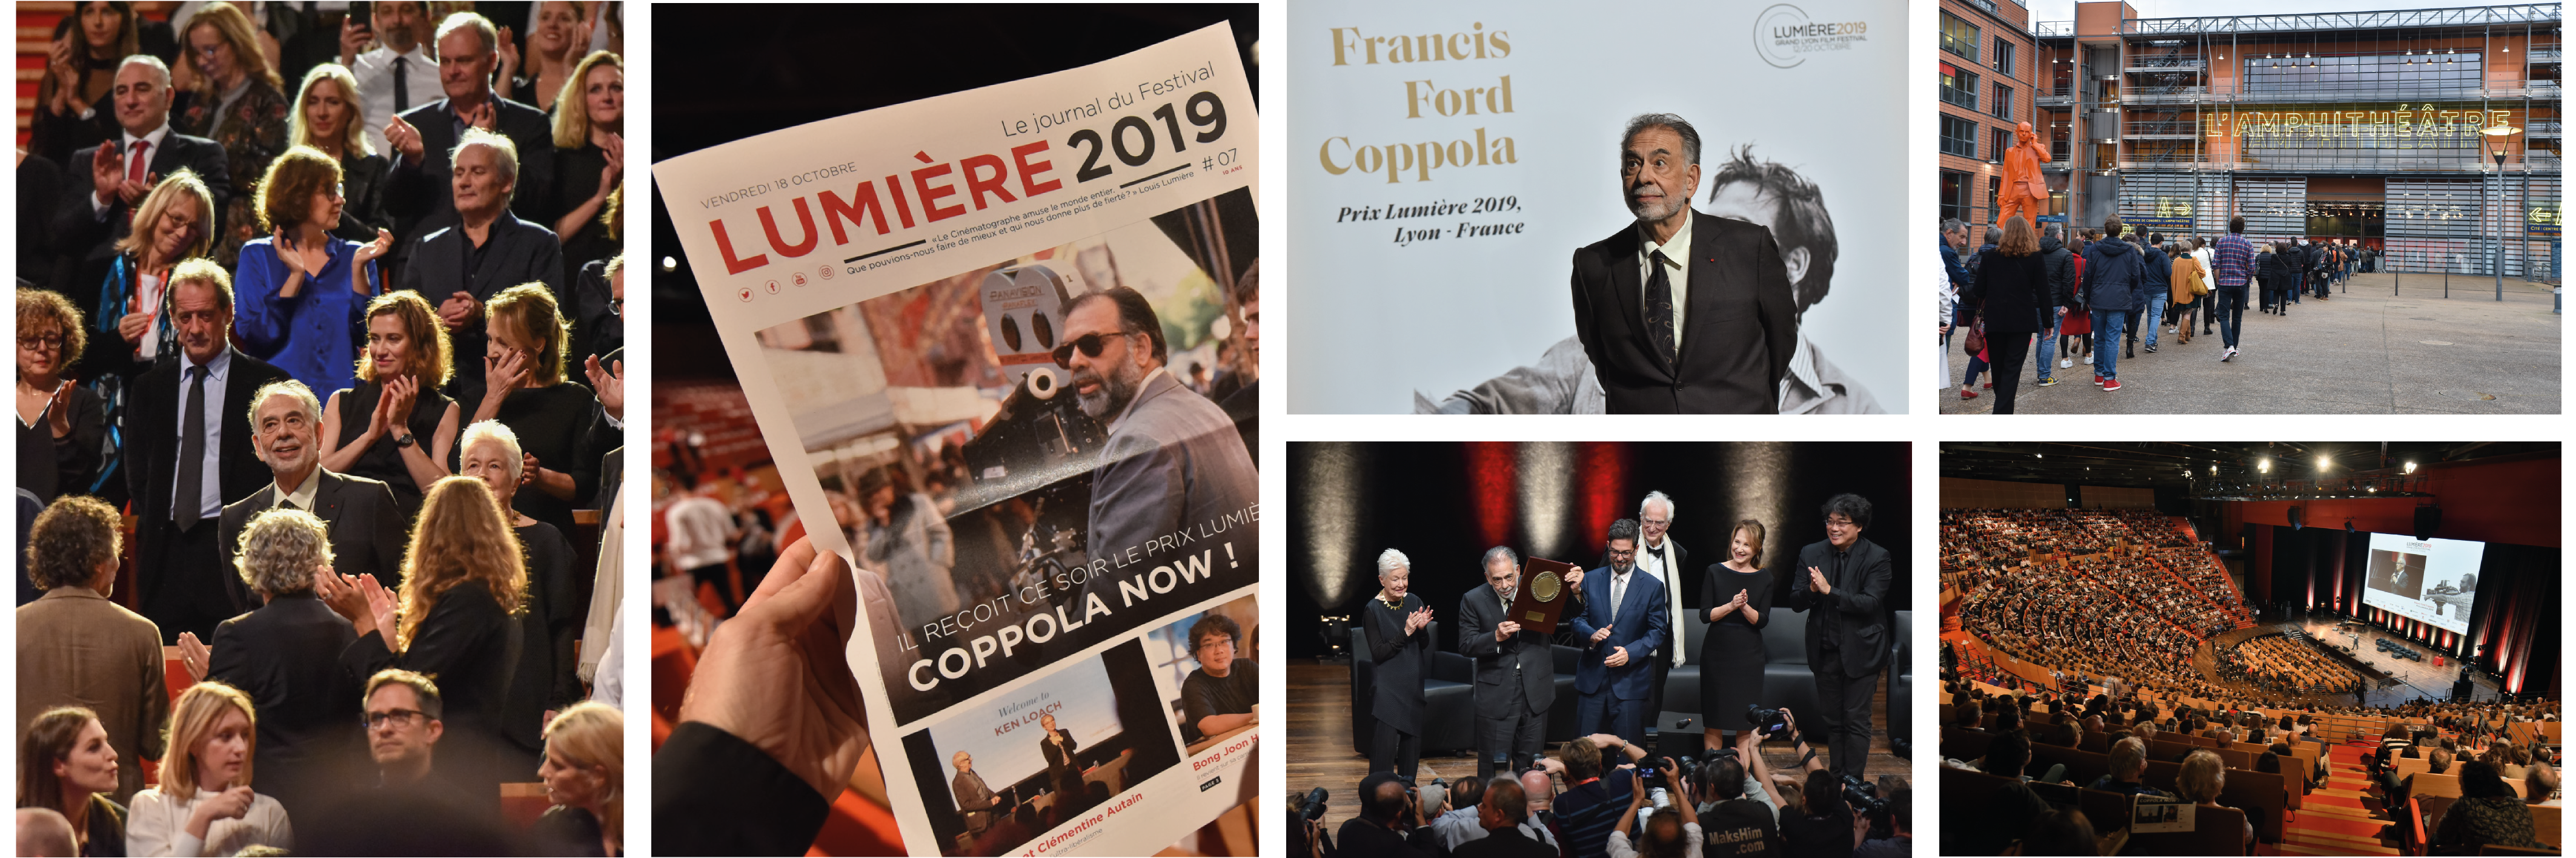 Prix Lumière Francis Ford Coppola 2019